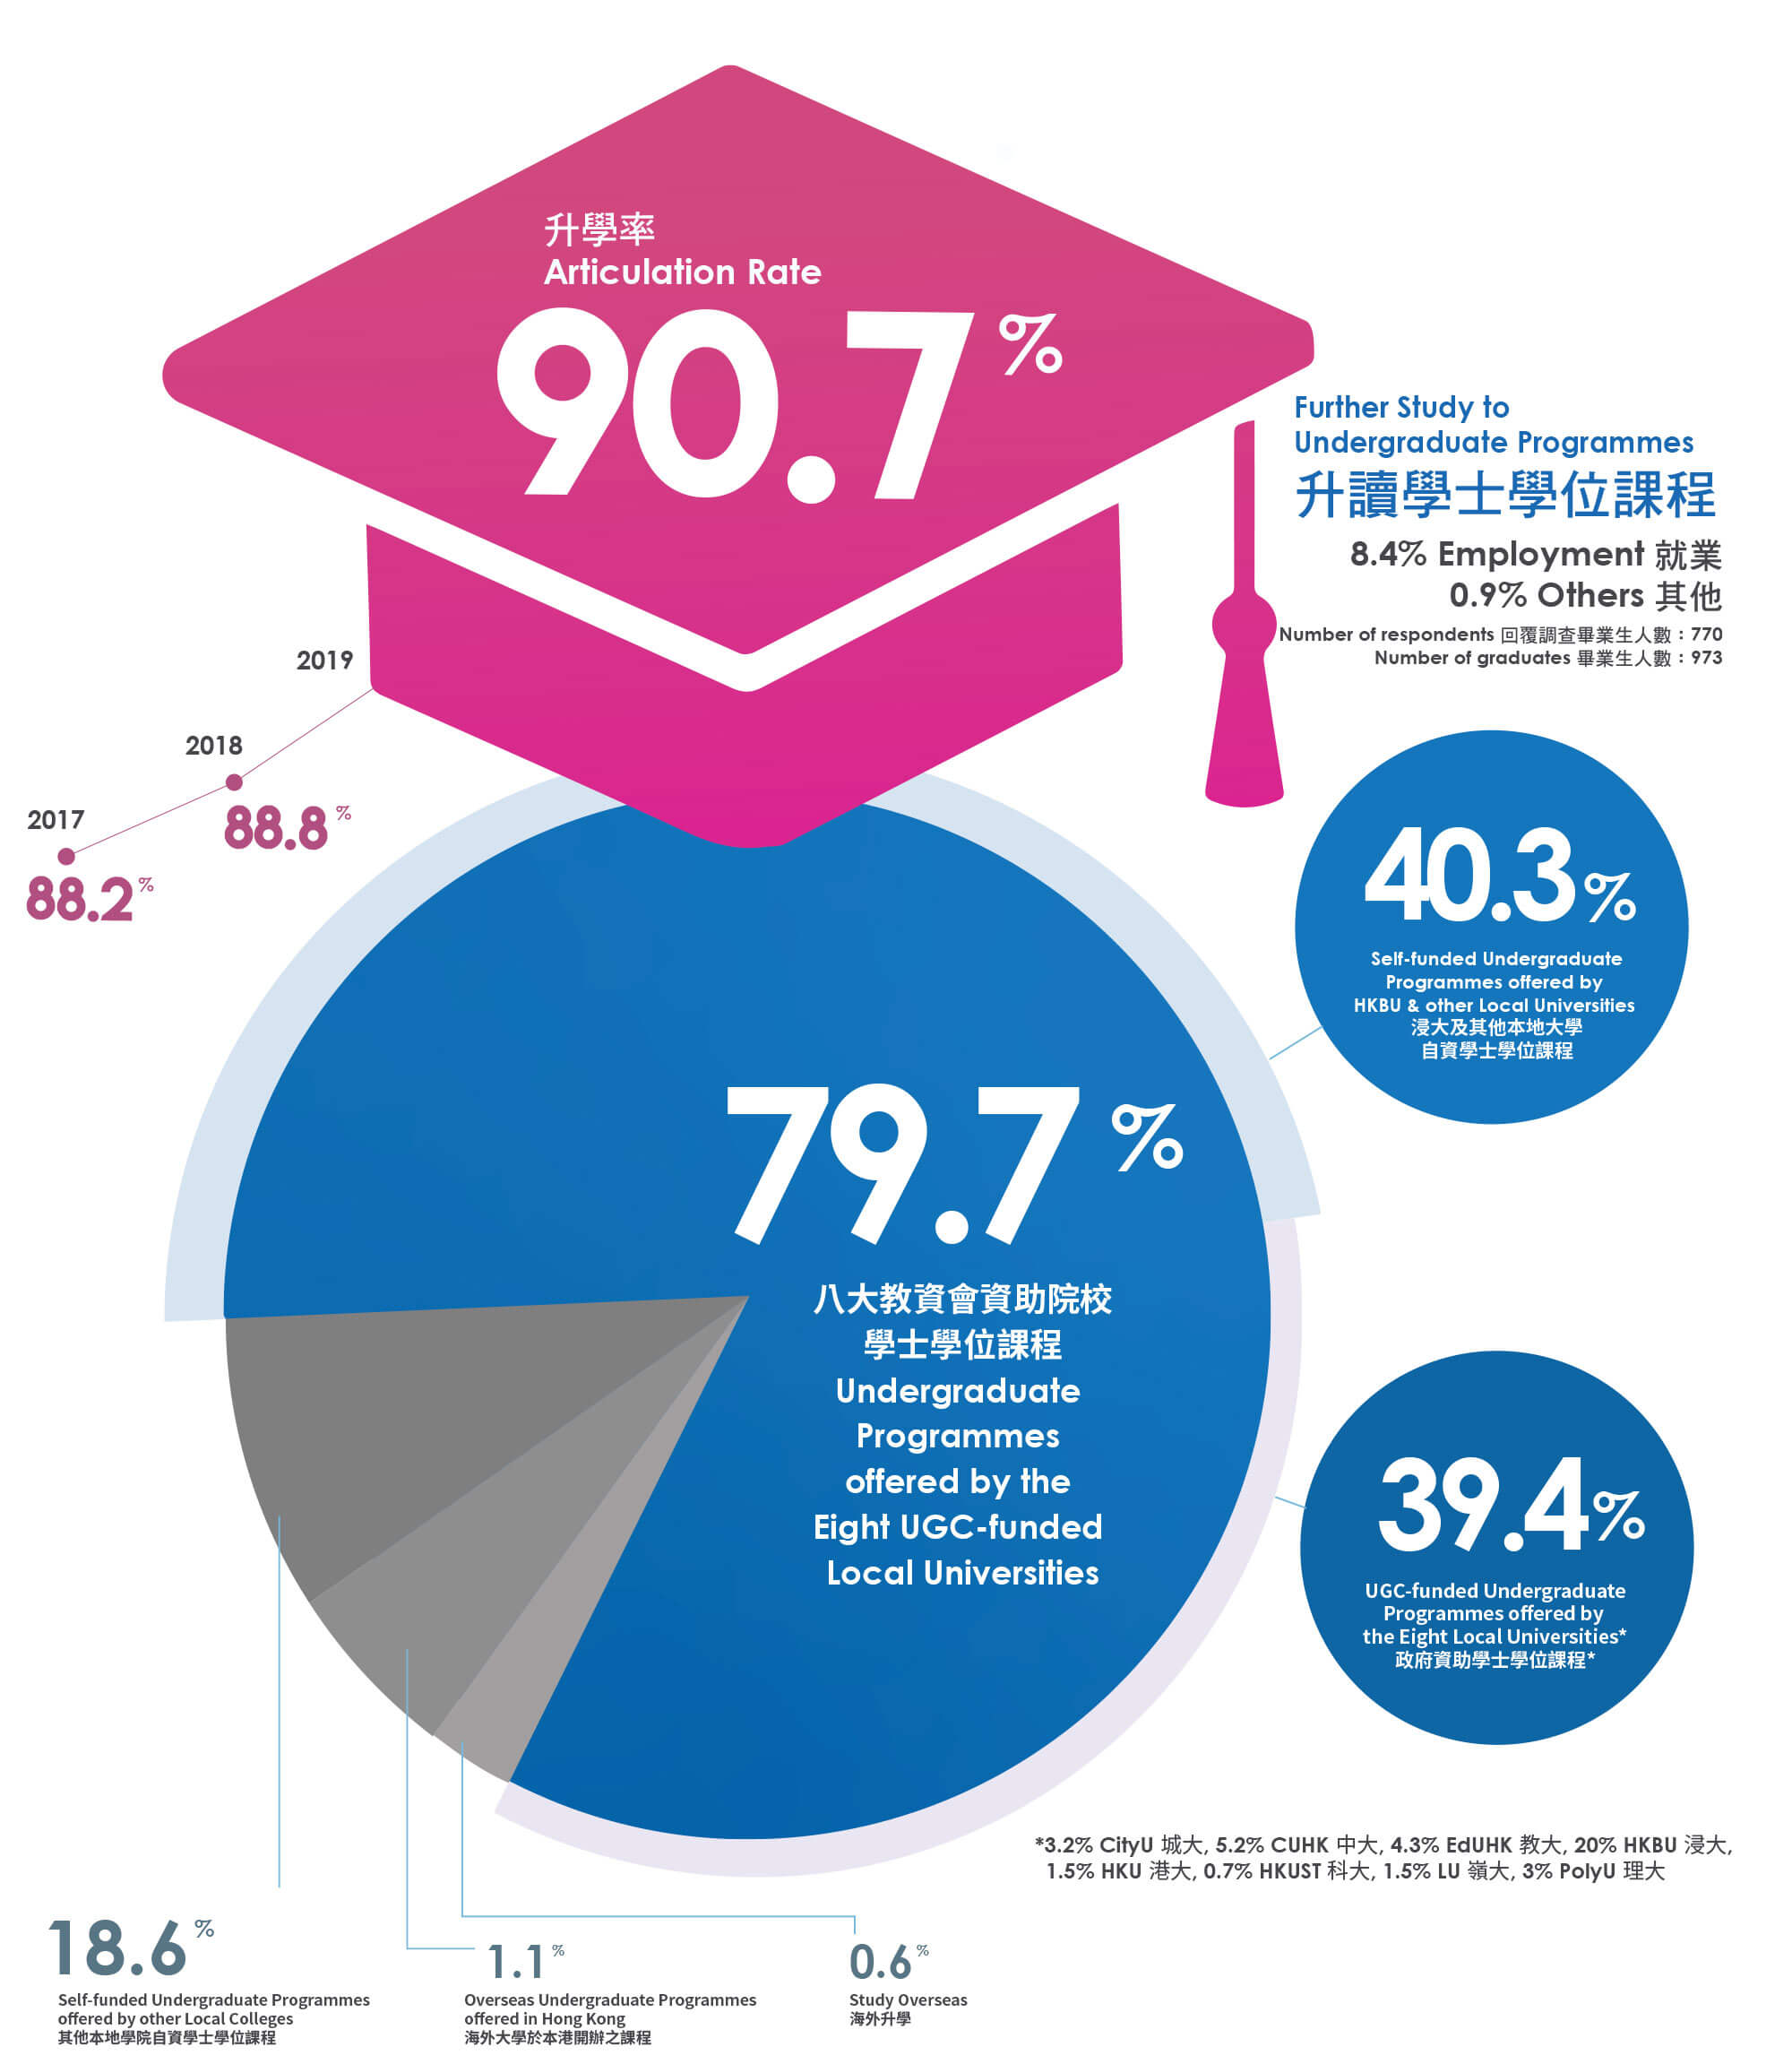 90.7% Further Study to Undergraduate Programmes